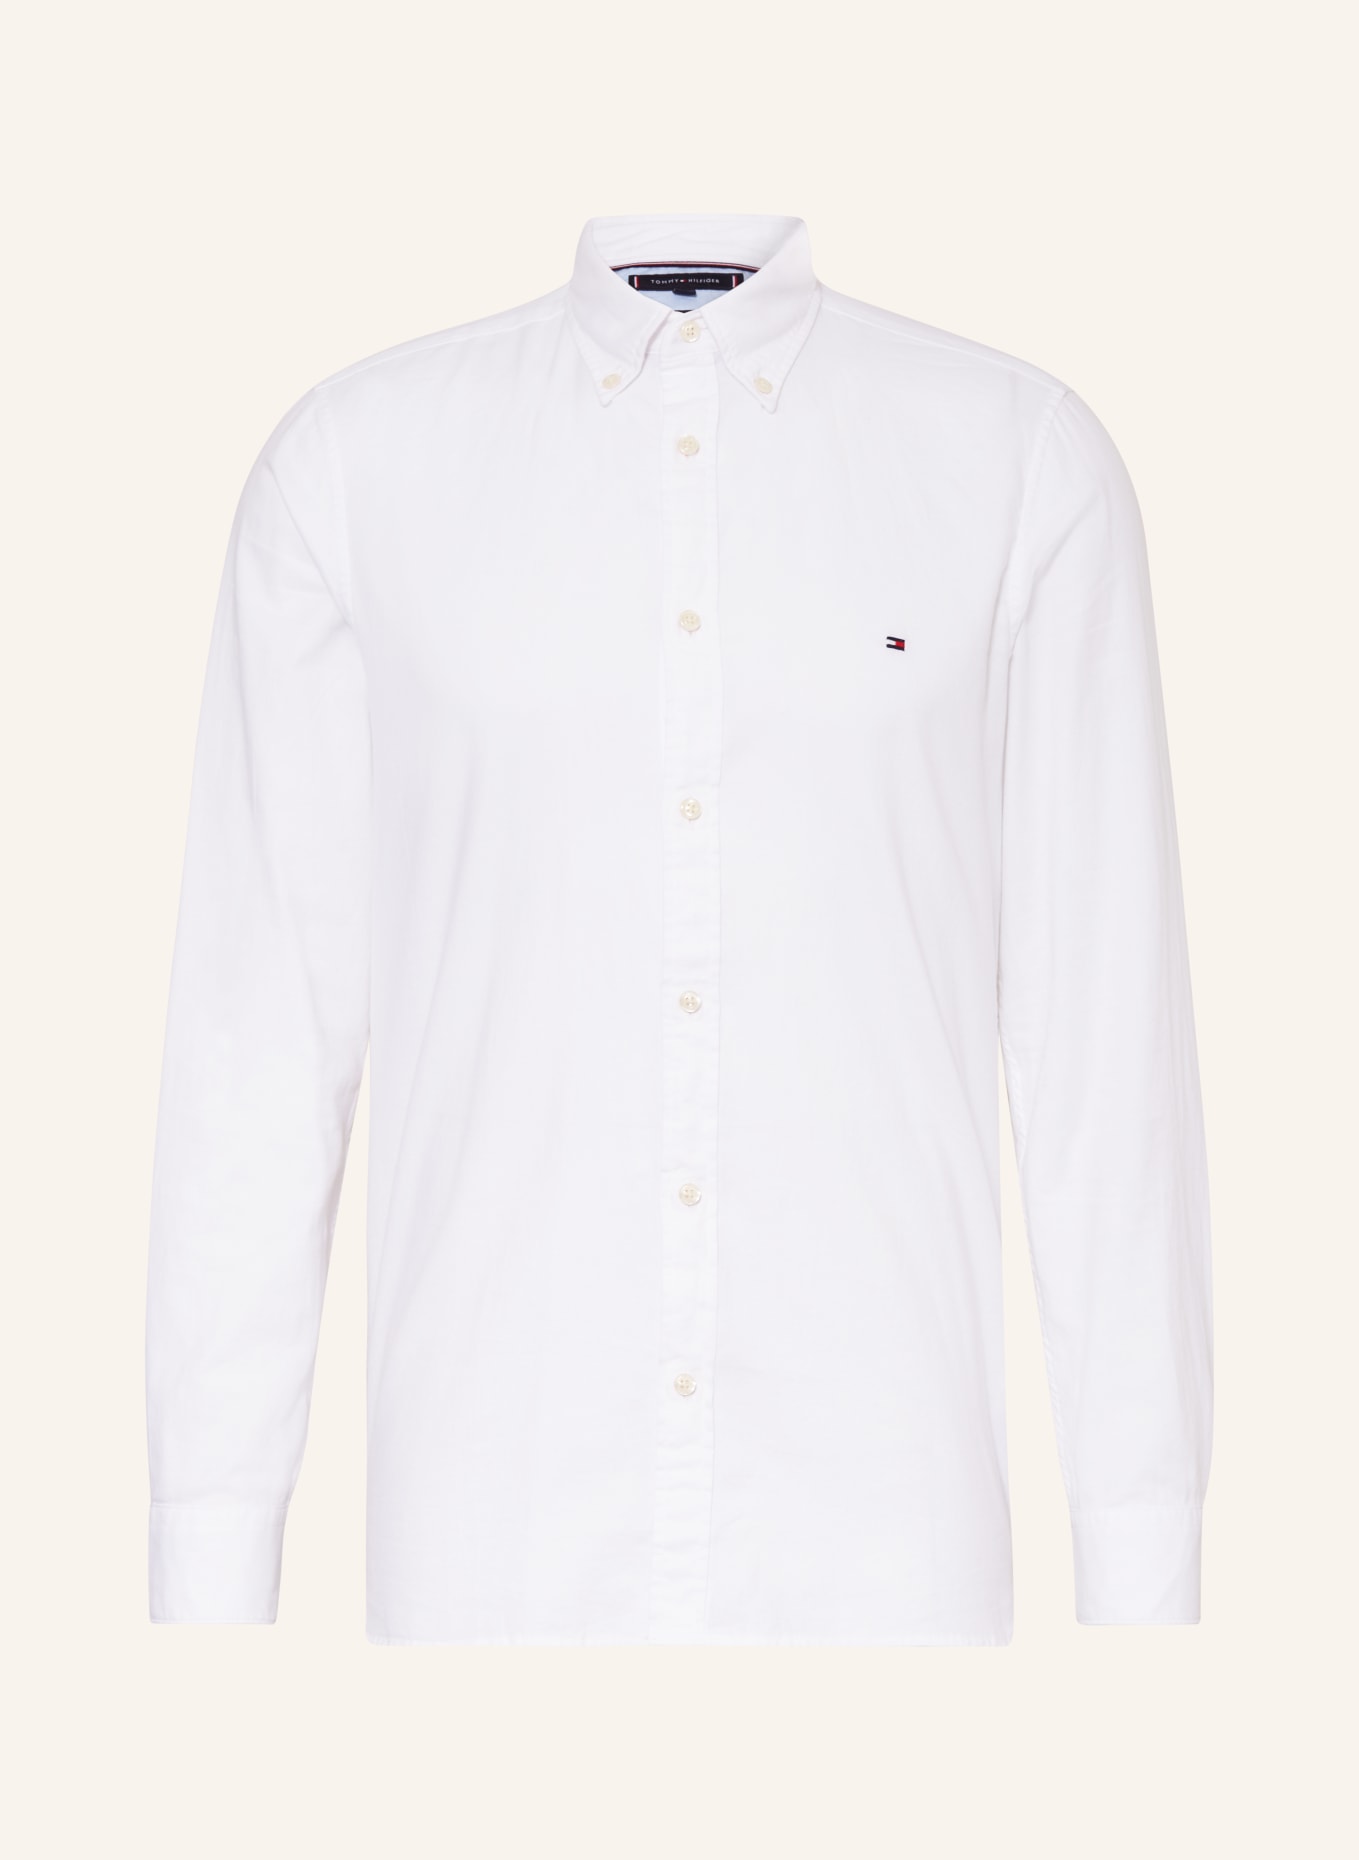 TOMMY HILFIGER Hemd FLEX Slim Fit, Farbe: WEISS (Bild 1)